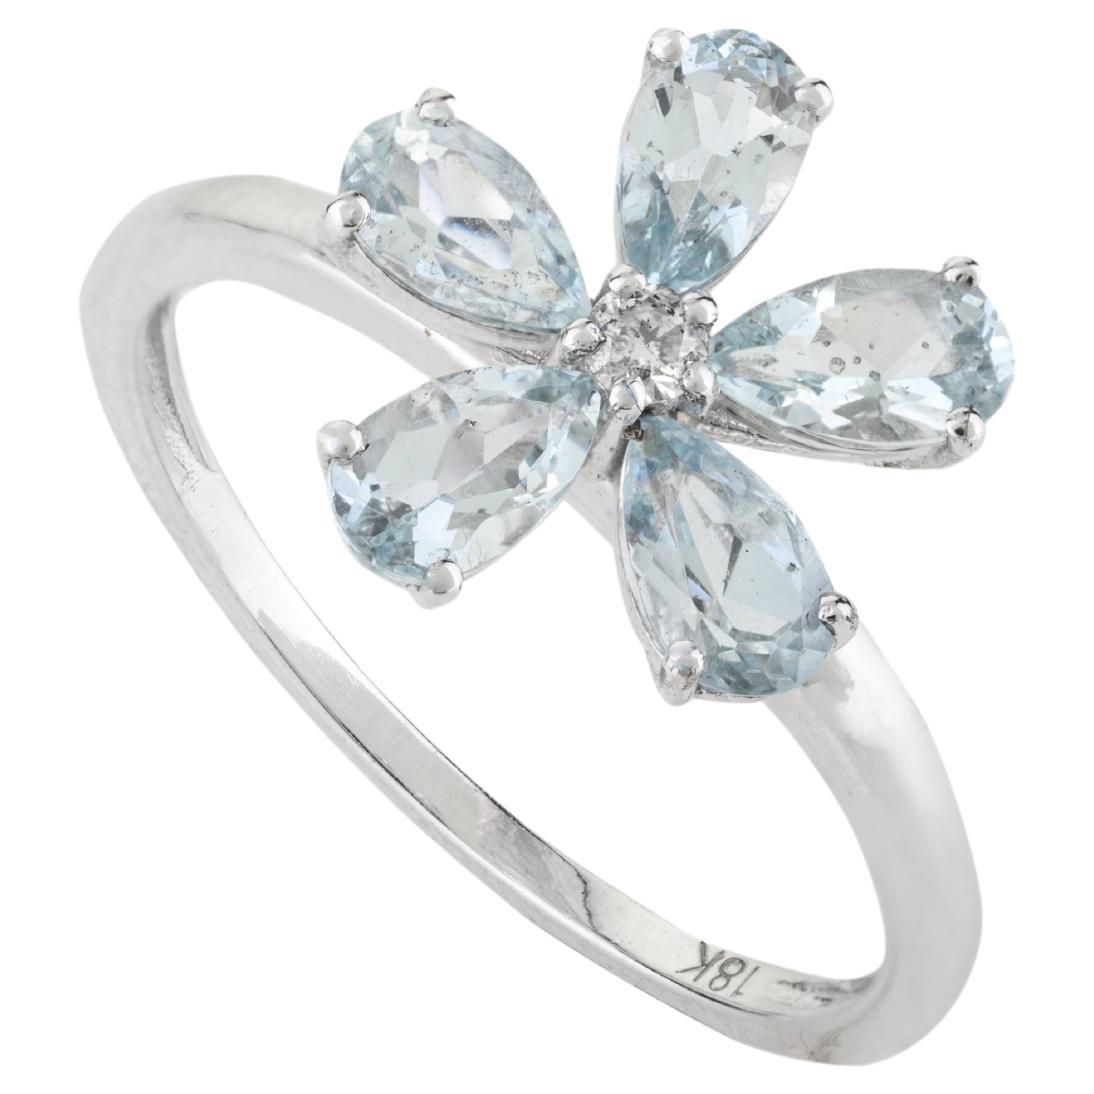 For Sale:  Natural Aquamarine Diamond Spring Flower Ring in 18k White Gold for Her